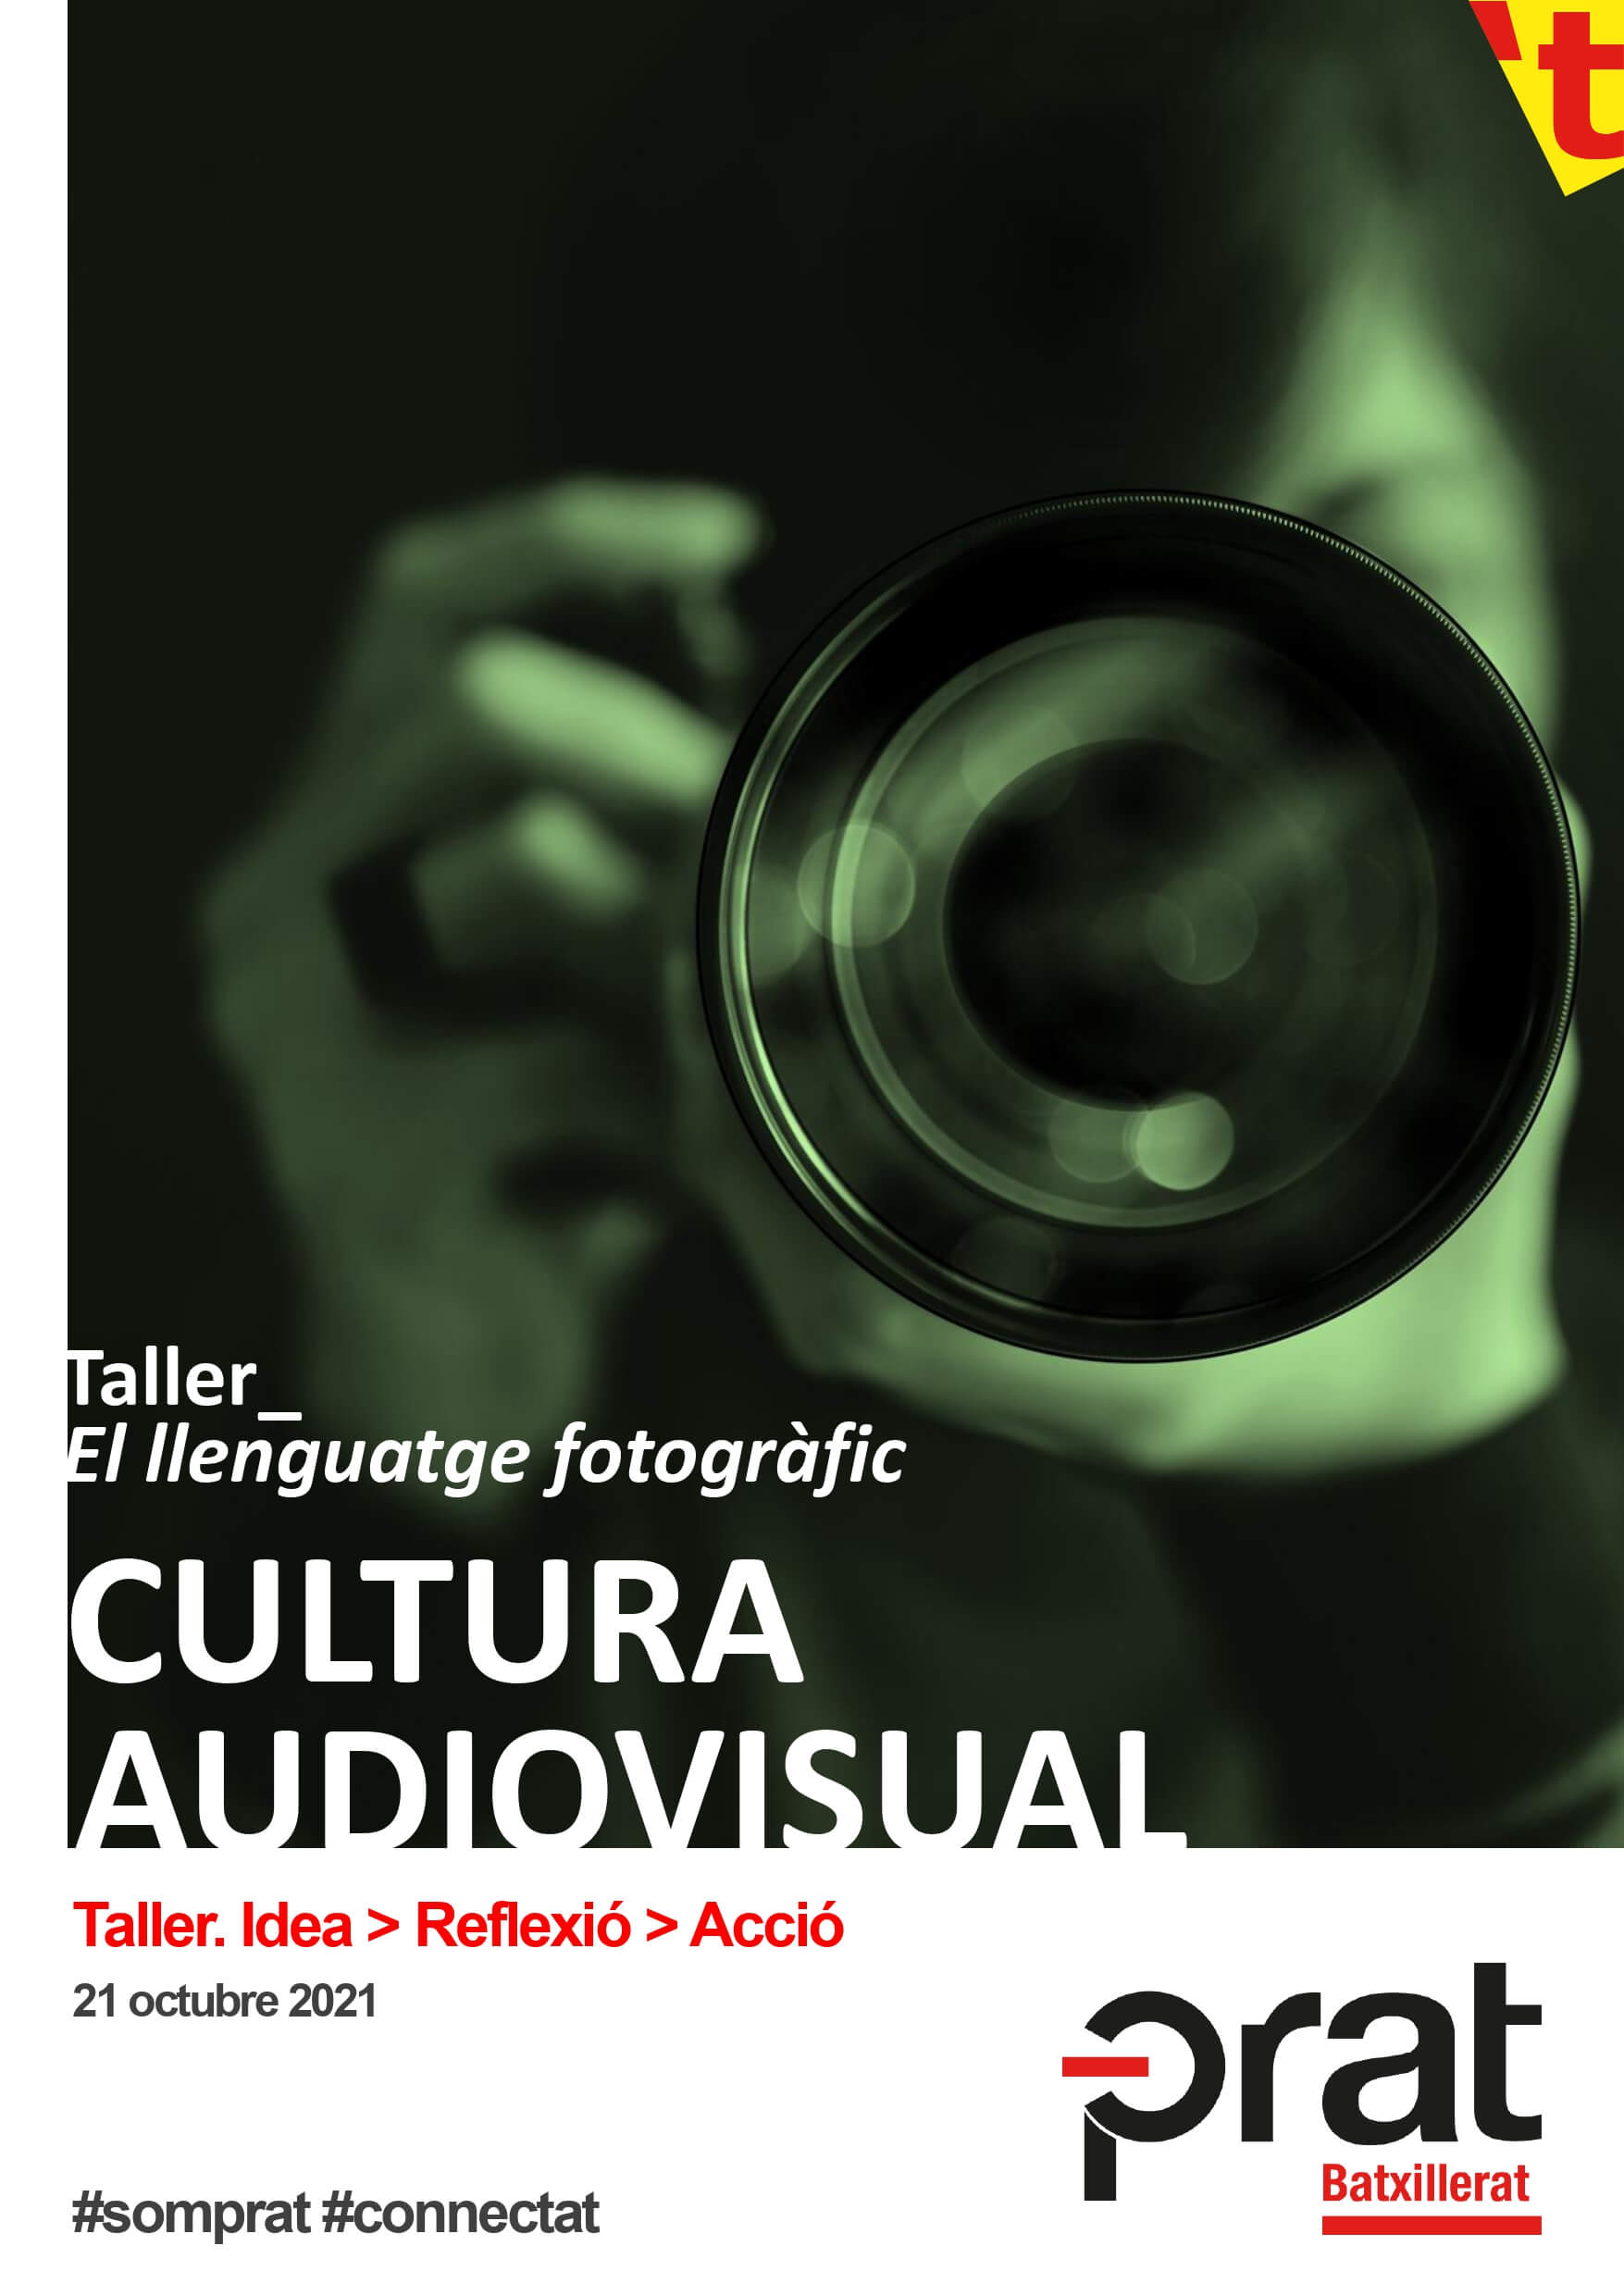 BATX3_Cultura_Audiovisual_21-22